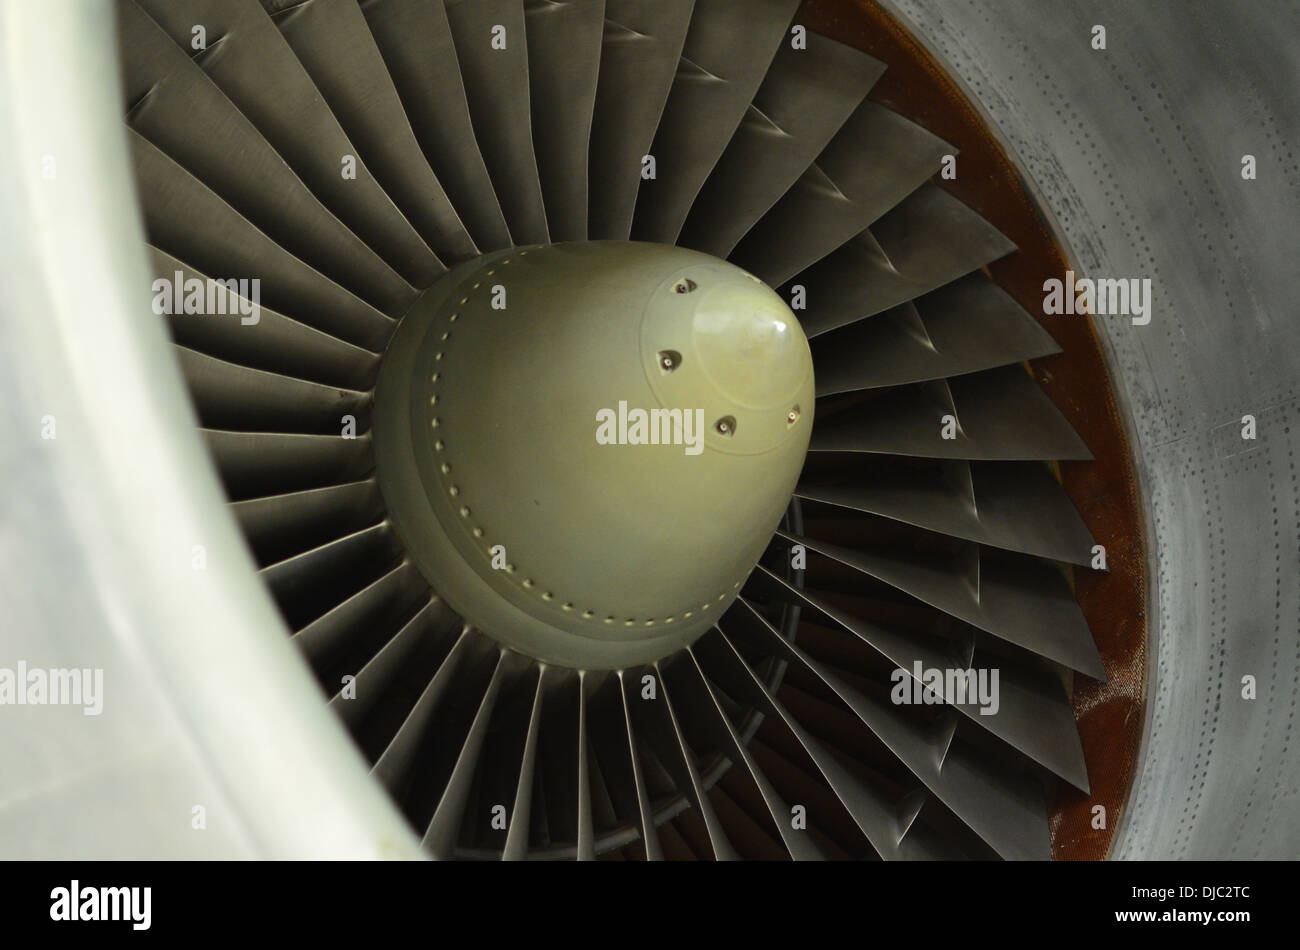 Rolls Royce jet engine turbine blades up close. Stock Photo